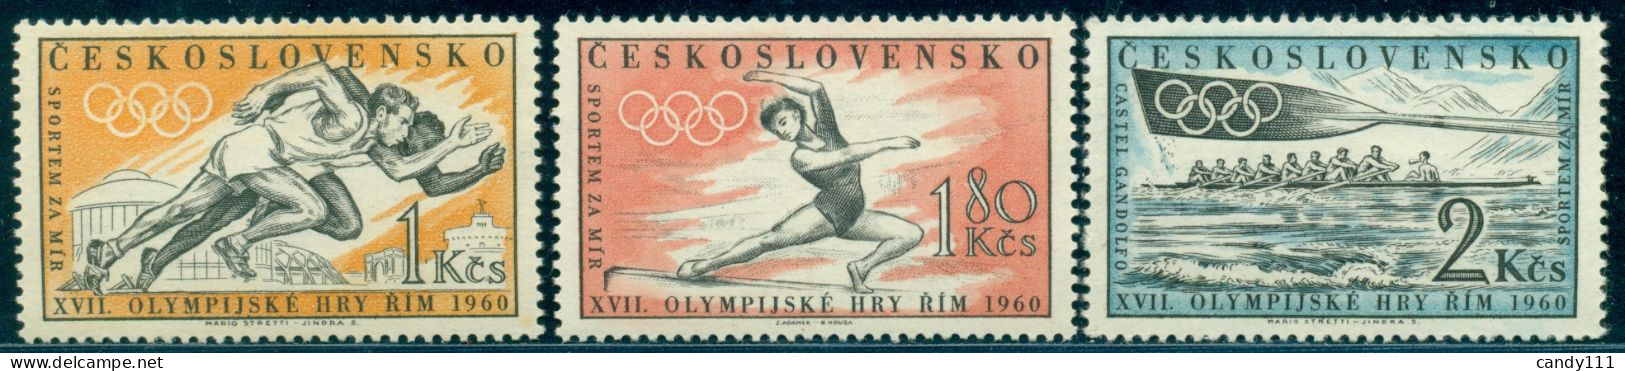 Czechoslovakia 1960 Rome Olympics,rowing,Gymnastics,running,Mi.1206,MNH - Sommer 1960: Rom